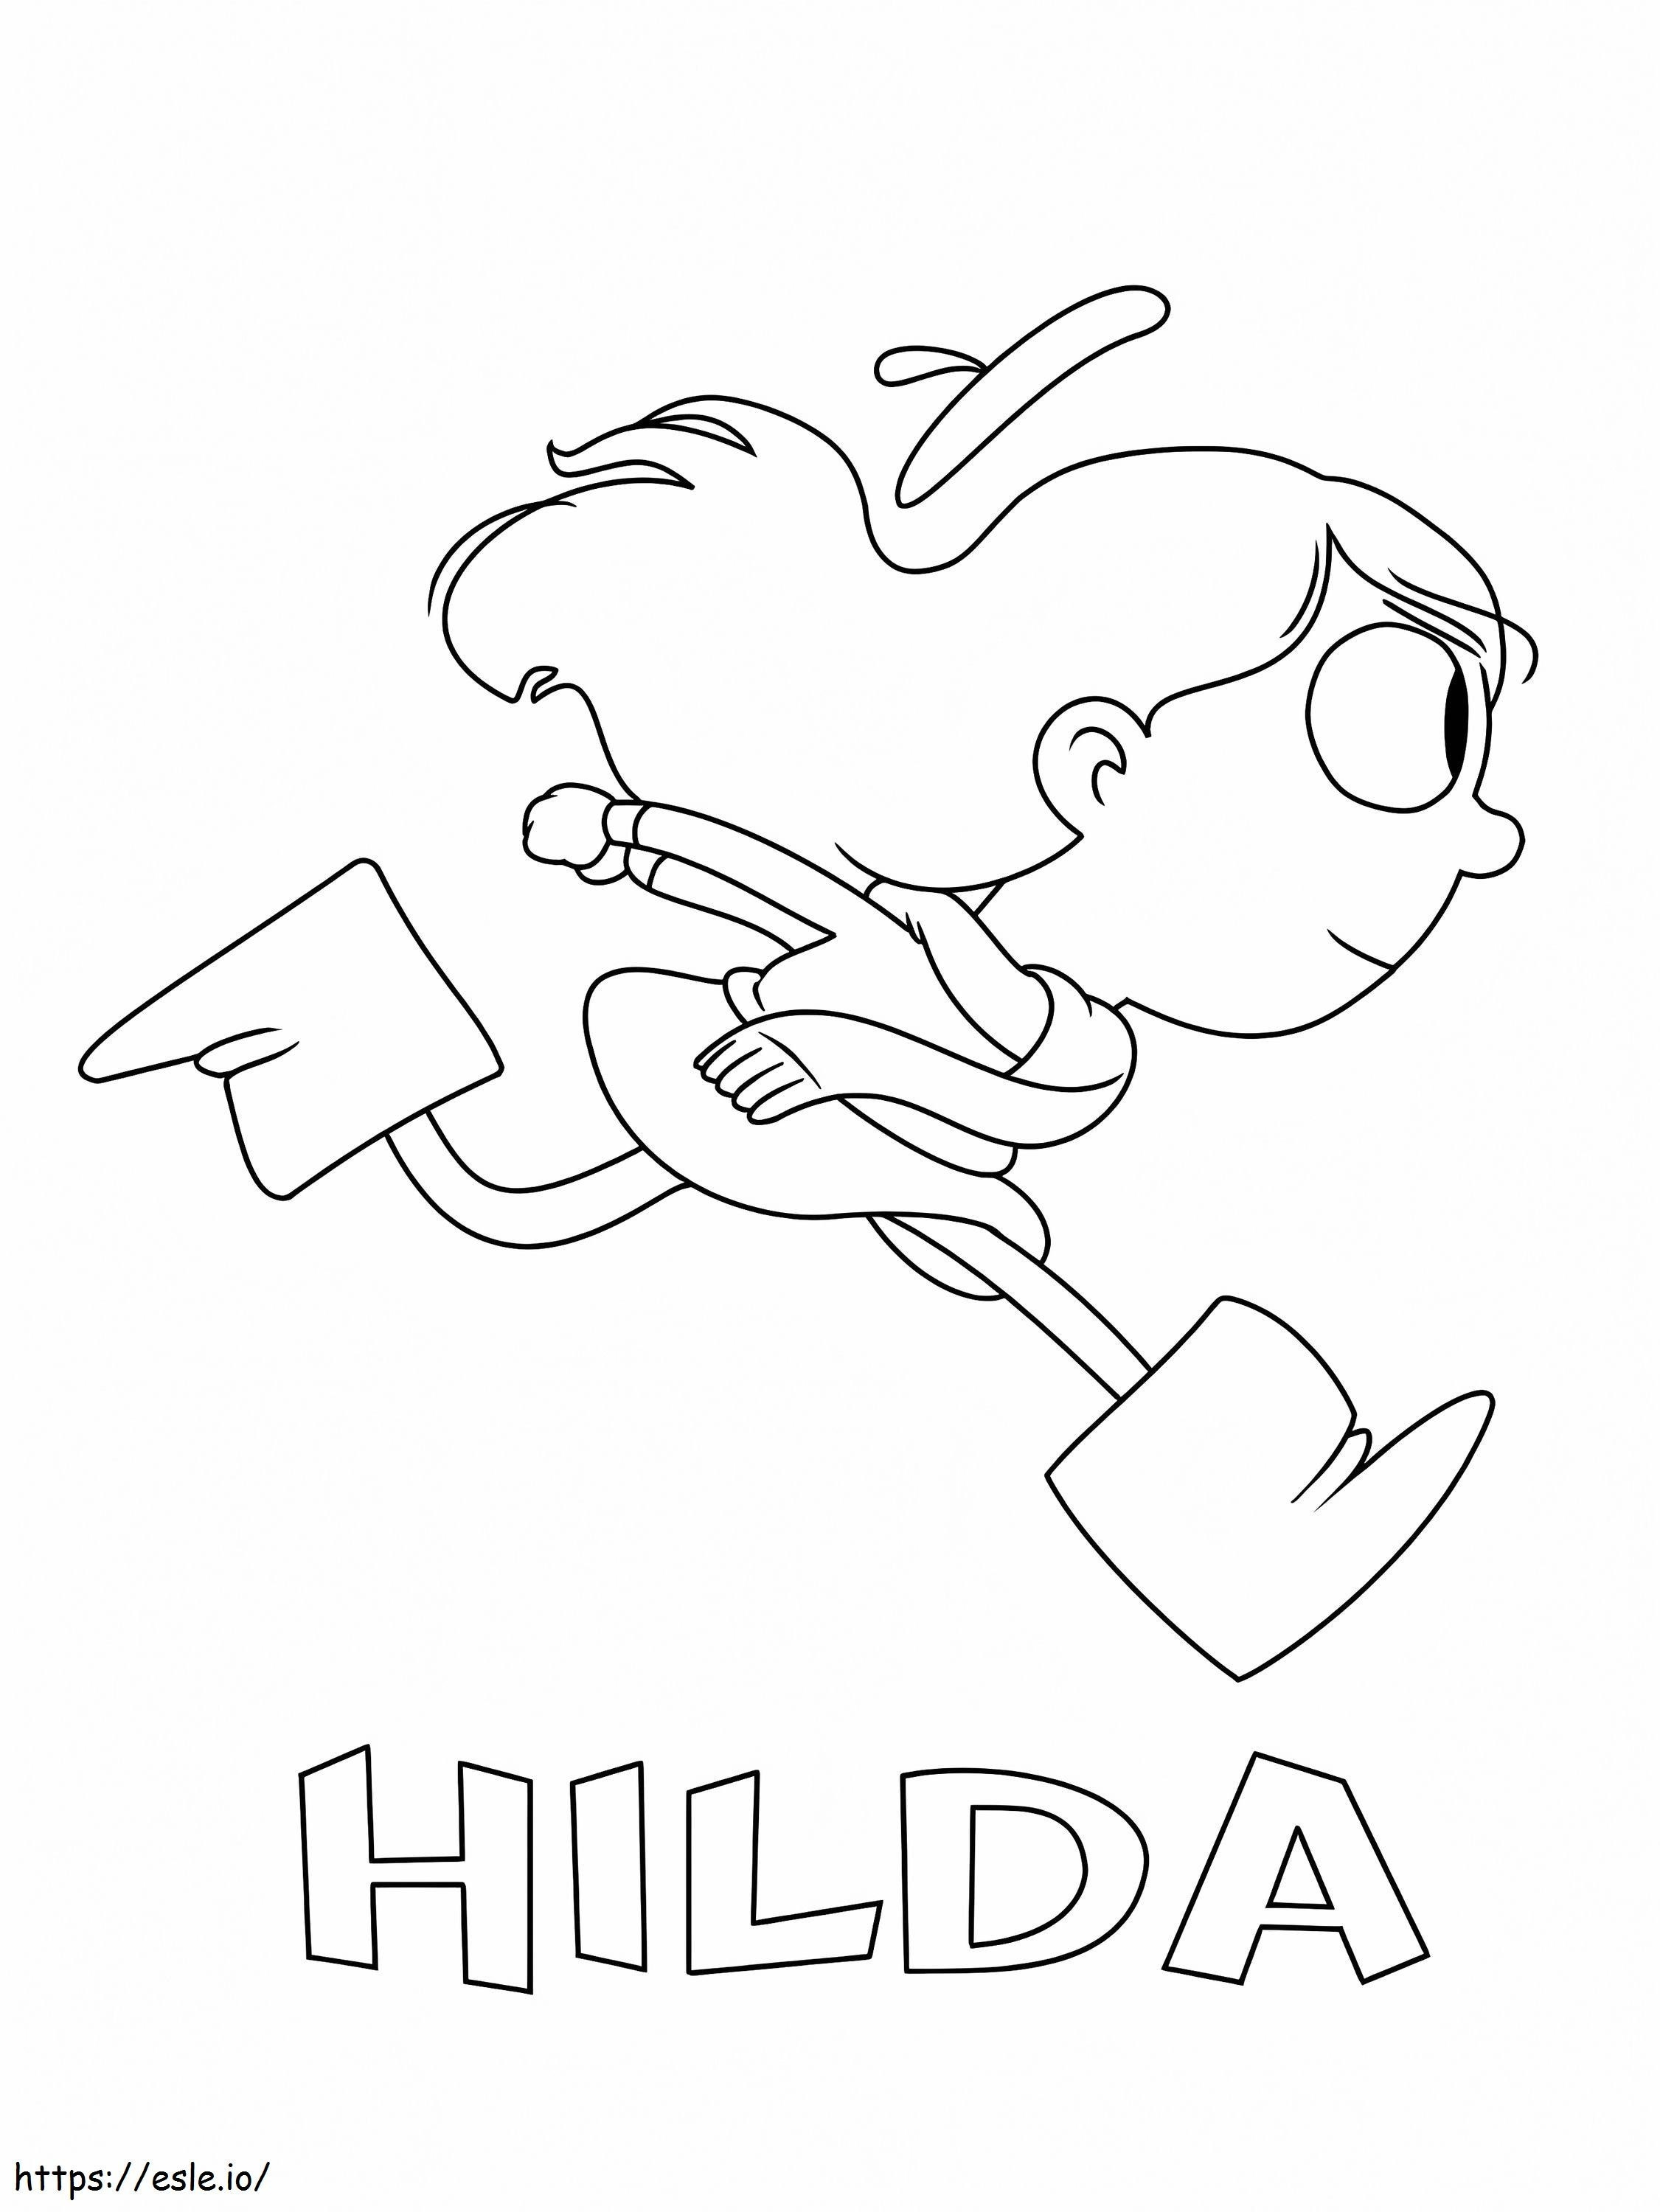 1581648312 Hilda 001 para colorir